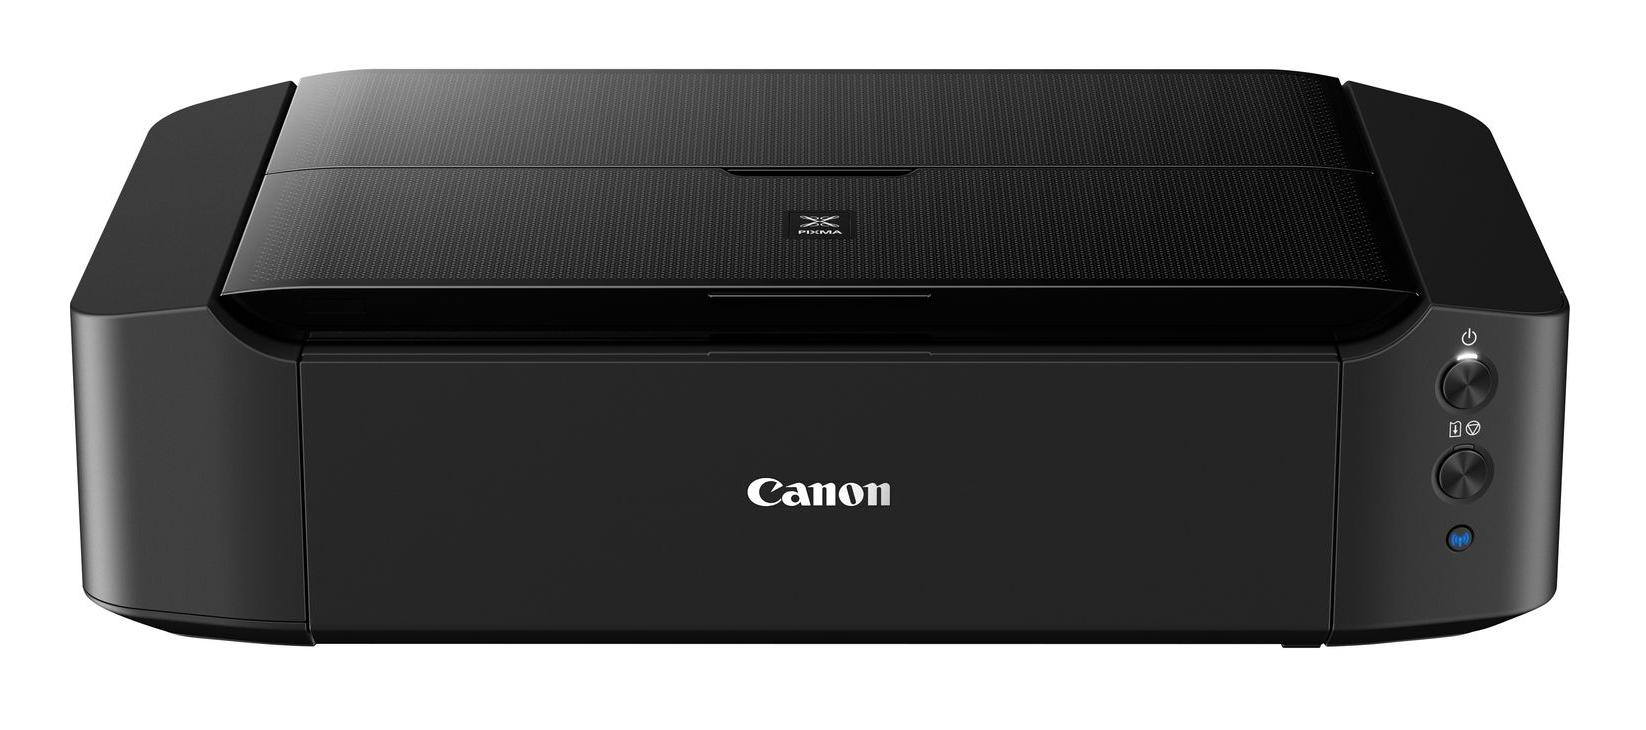 canon Pixma IP8750 A3 Inkjet Printer 8746B008 - MW01